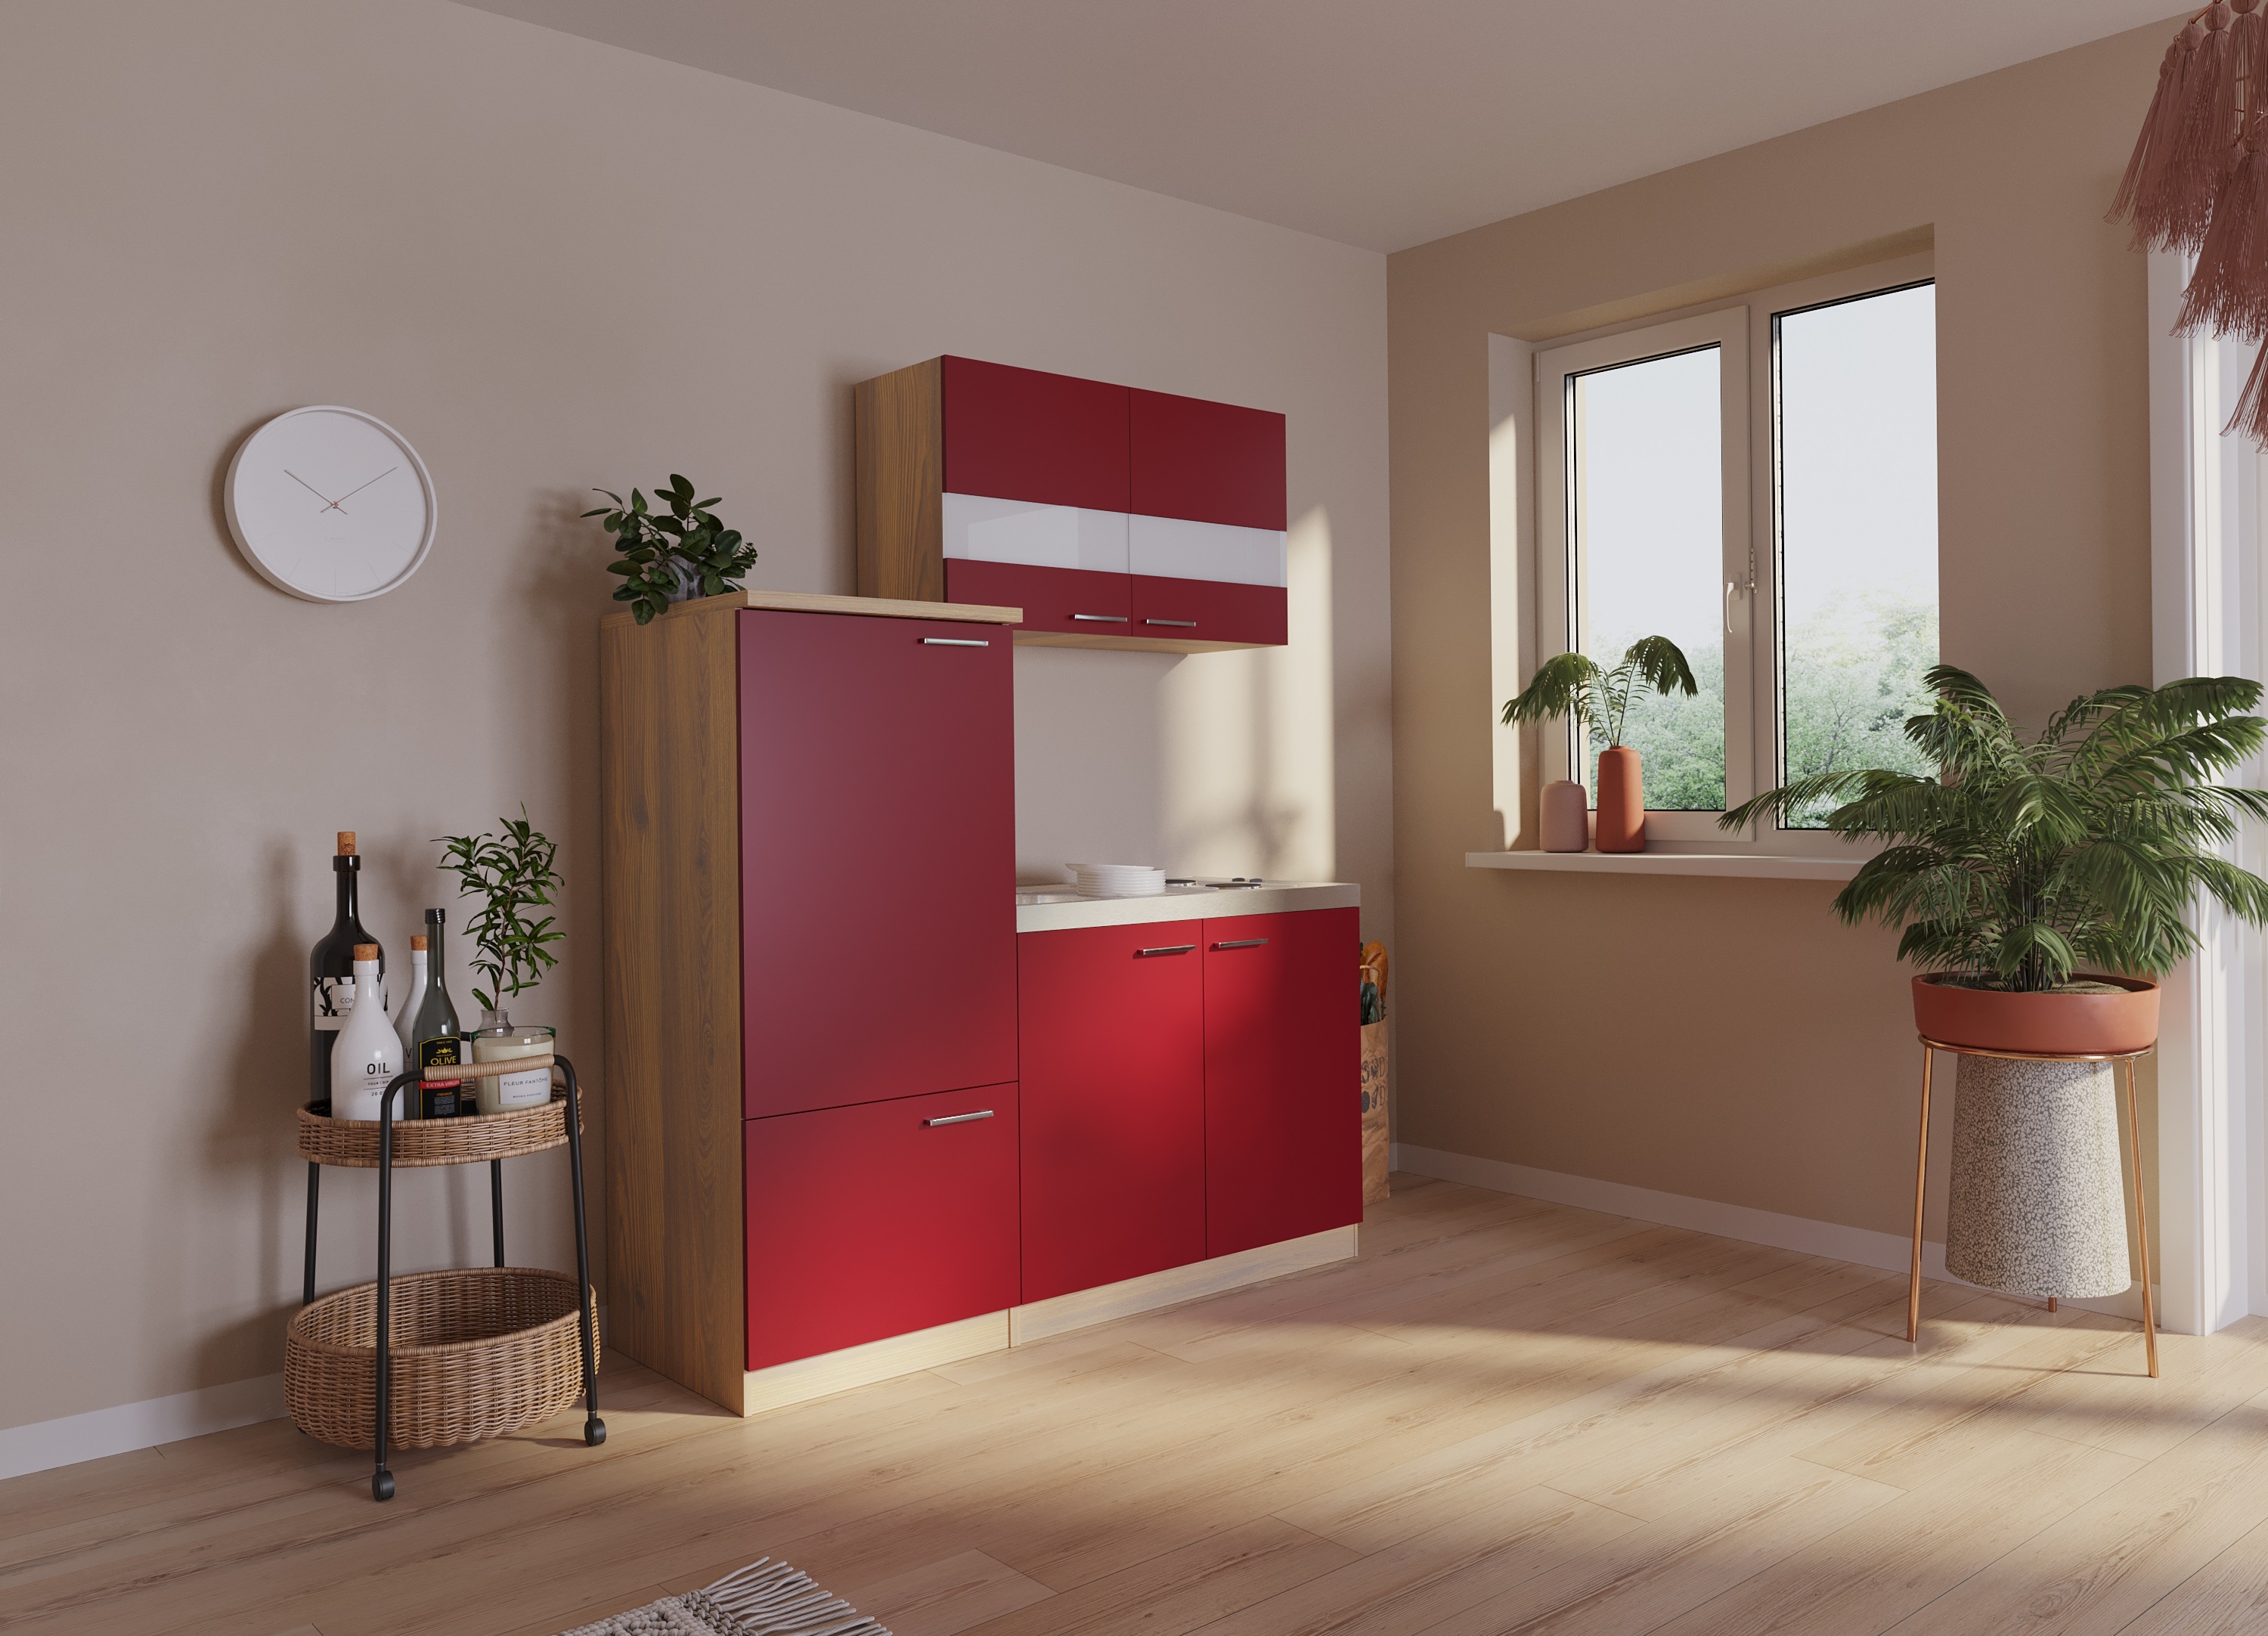 respekta kitchen unit kitchen single kitchen fitted kitchen kitchen block 160 cm oak red